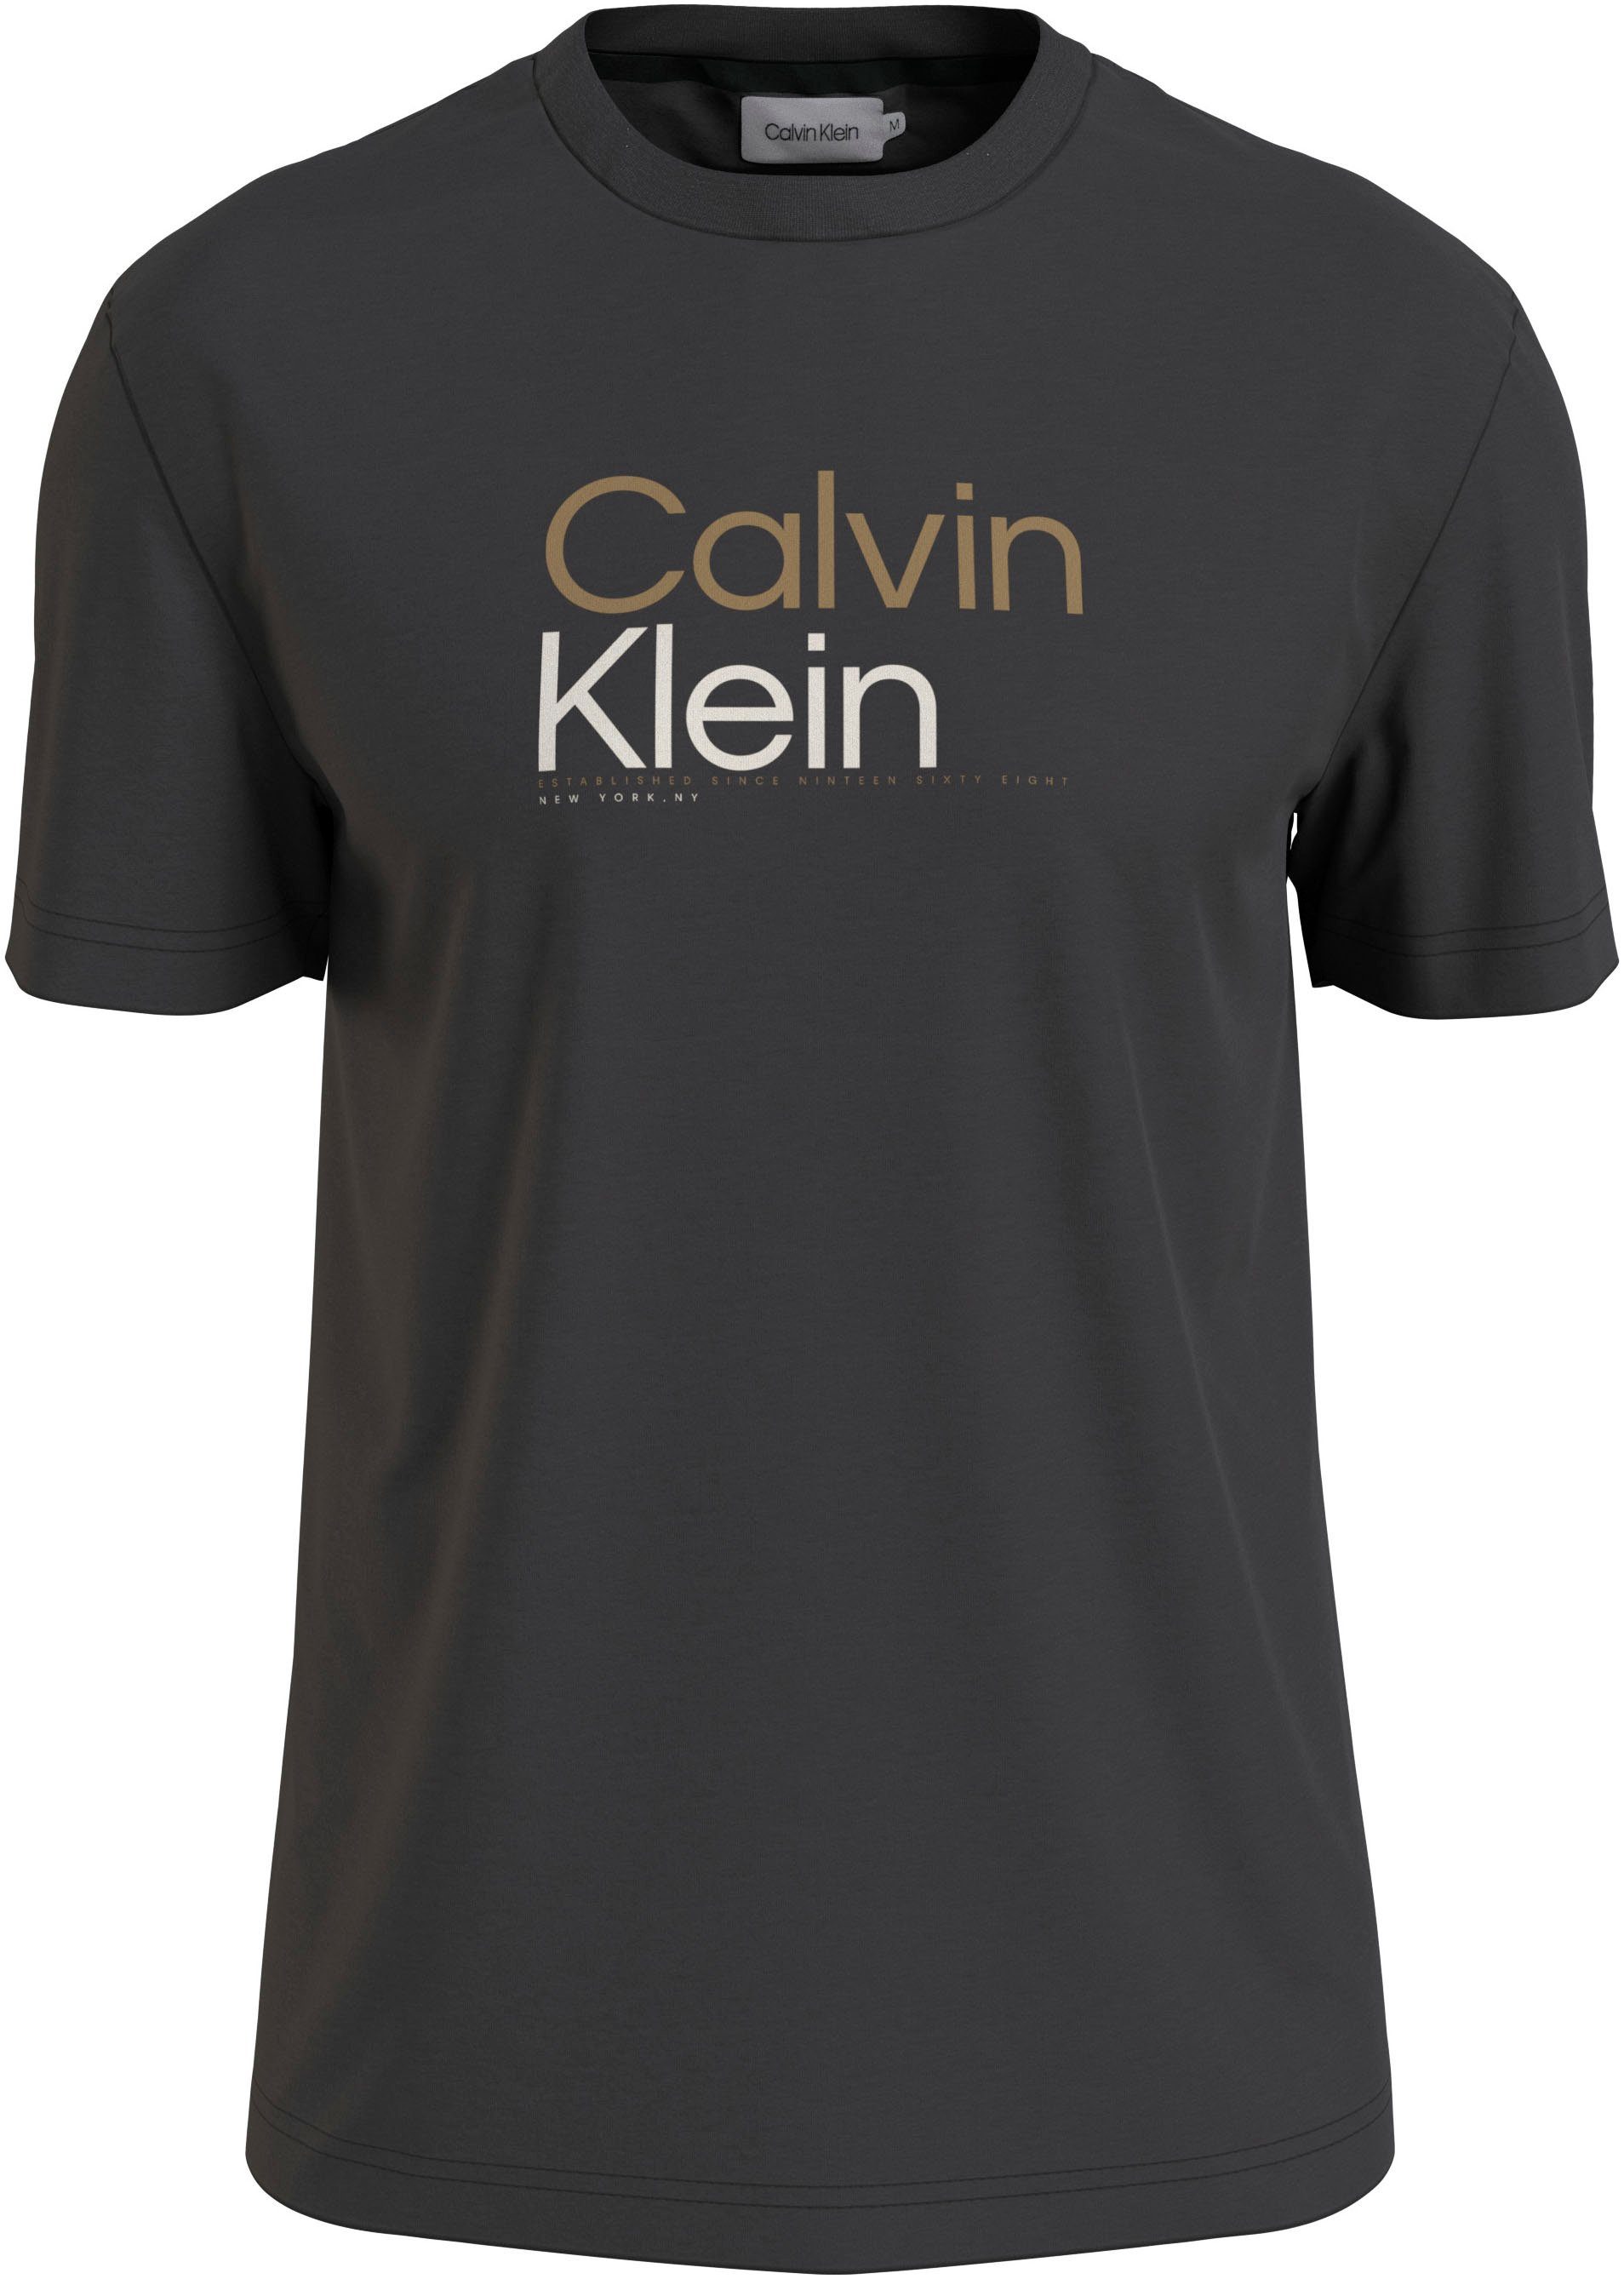 Calvin Klein COLOR BT_MULTI mit Markenlabel T-SHIRT Ck T-Shirt Black Big&Tall LOGO